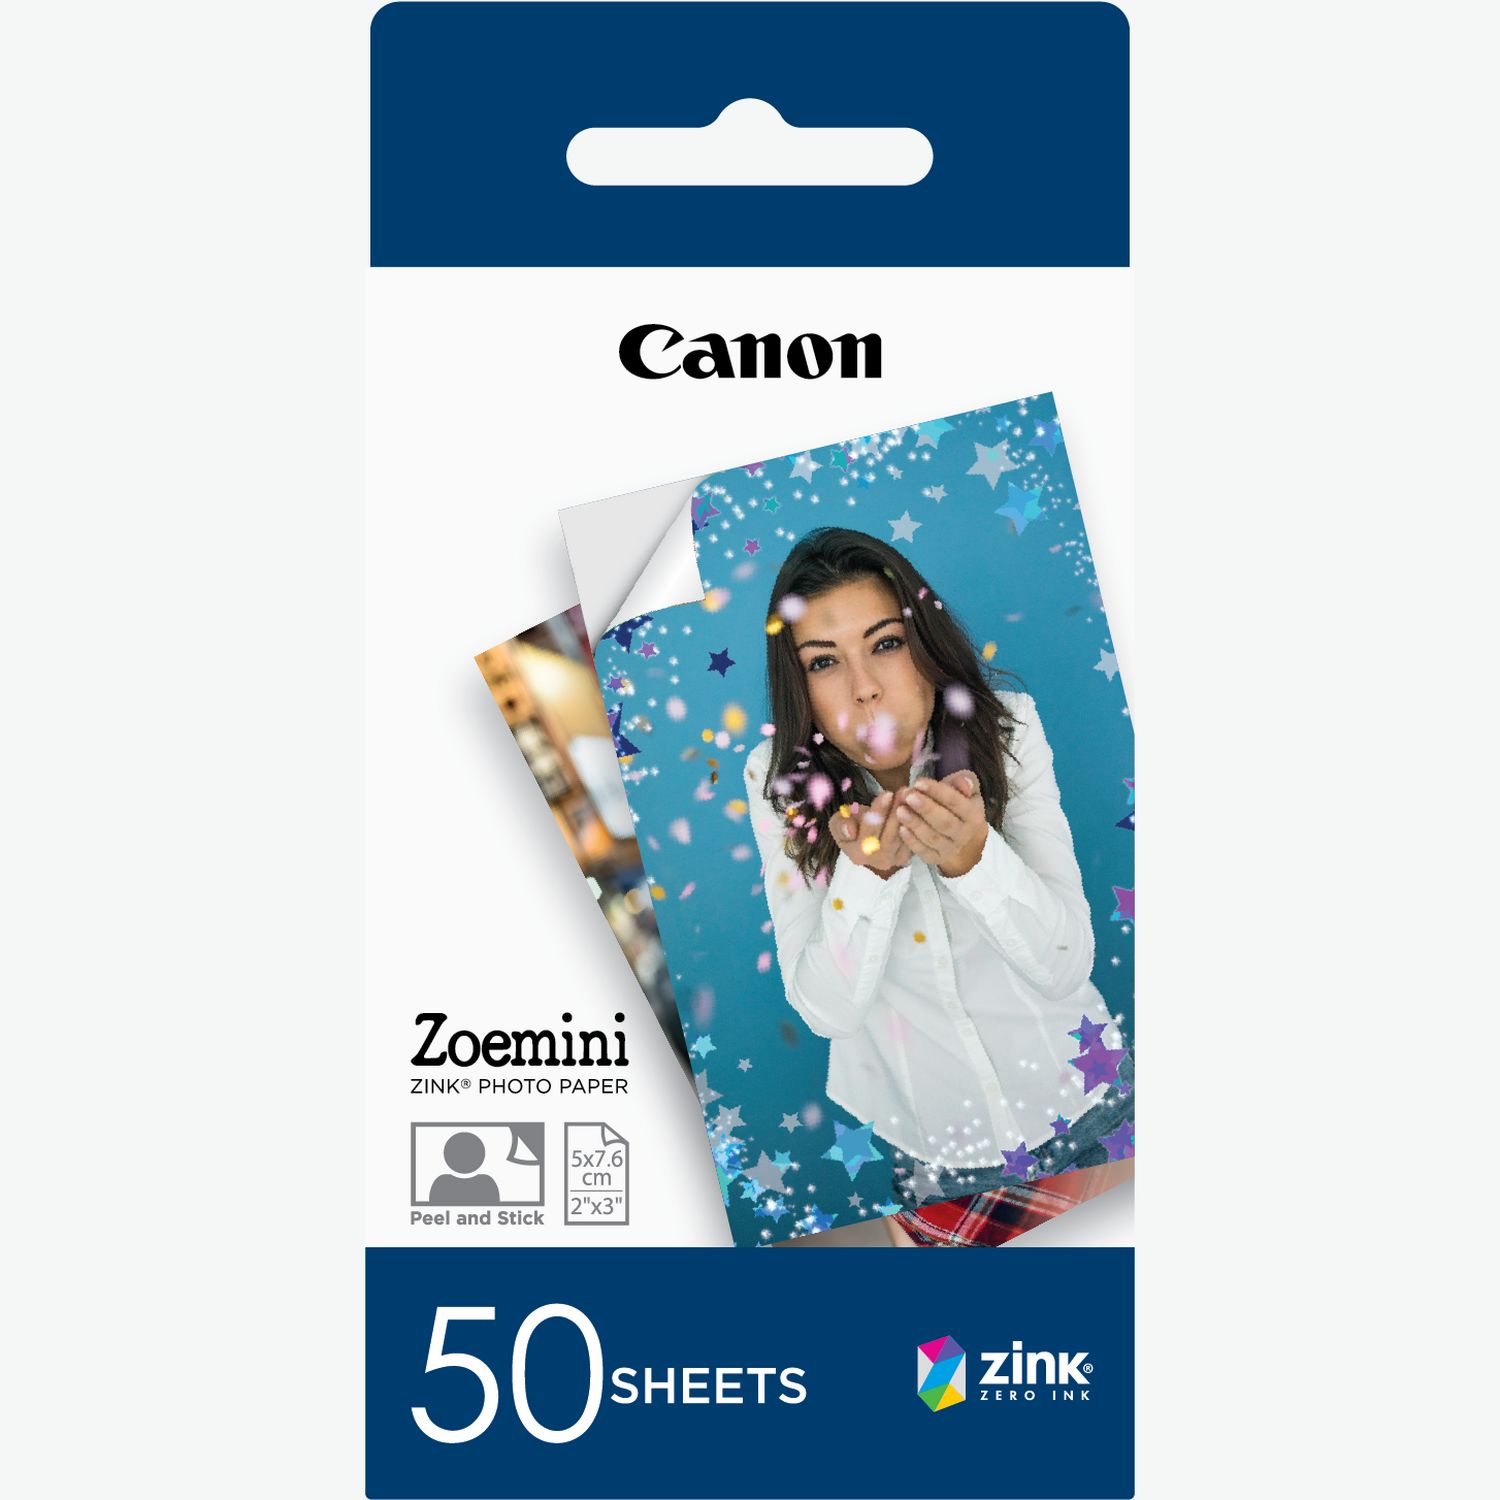 Compra Impresora fotográfica en color portátil Canon Zoemini 2, oro rosa —  Tienda Canon Espana